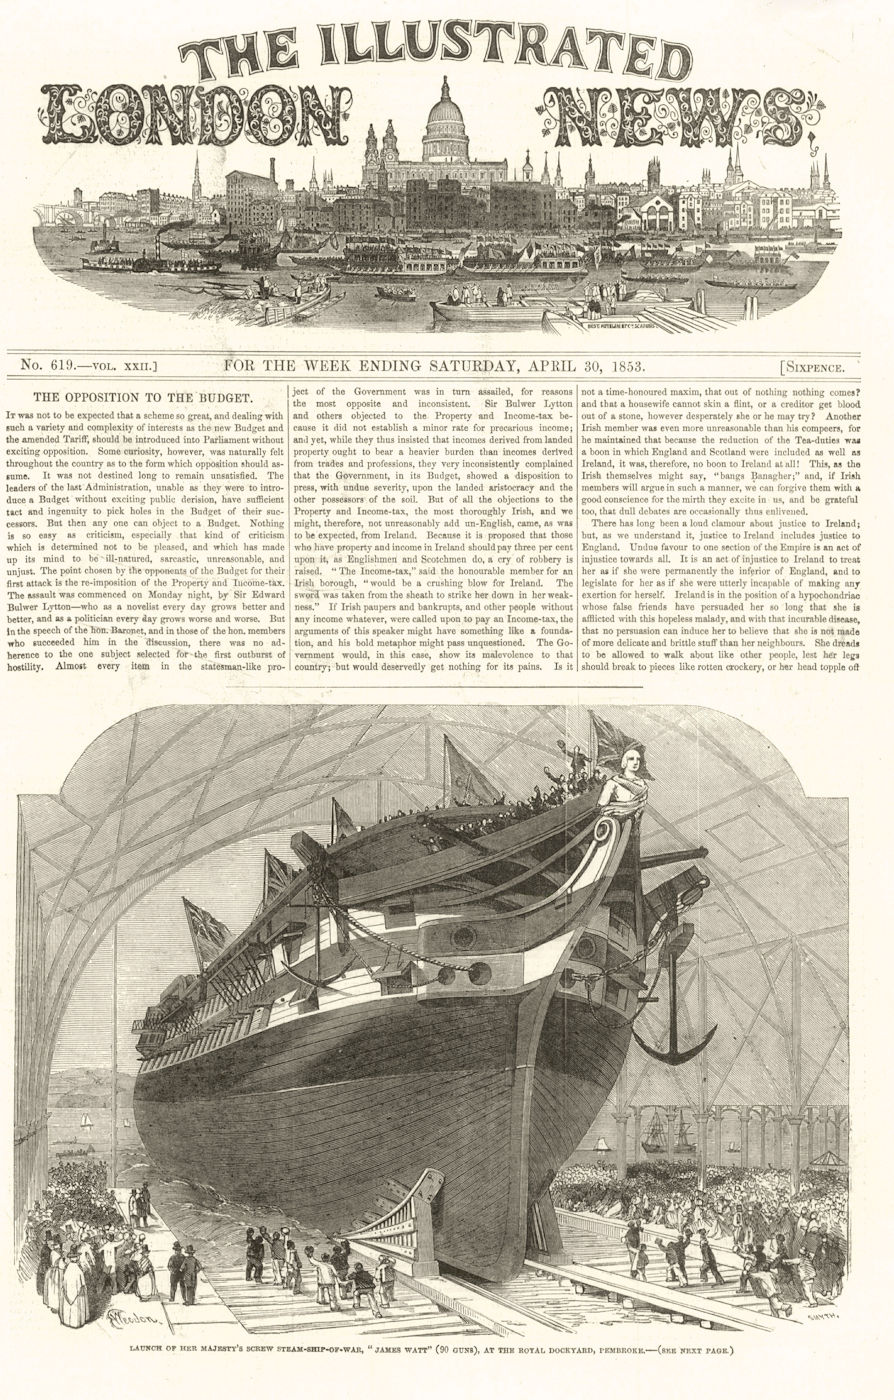 Launch of HMS James Watt, Royal Dockyard, Pembroke. Wales 1853 old print